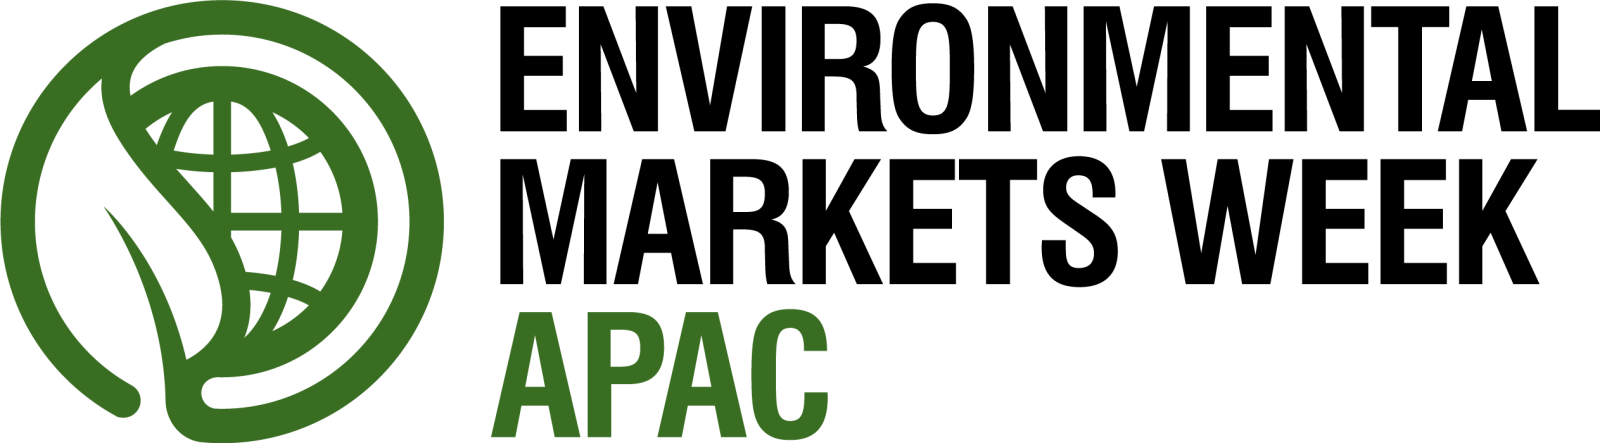 Environmental-Markets-Week_APAC_pos